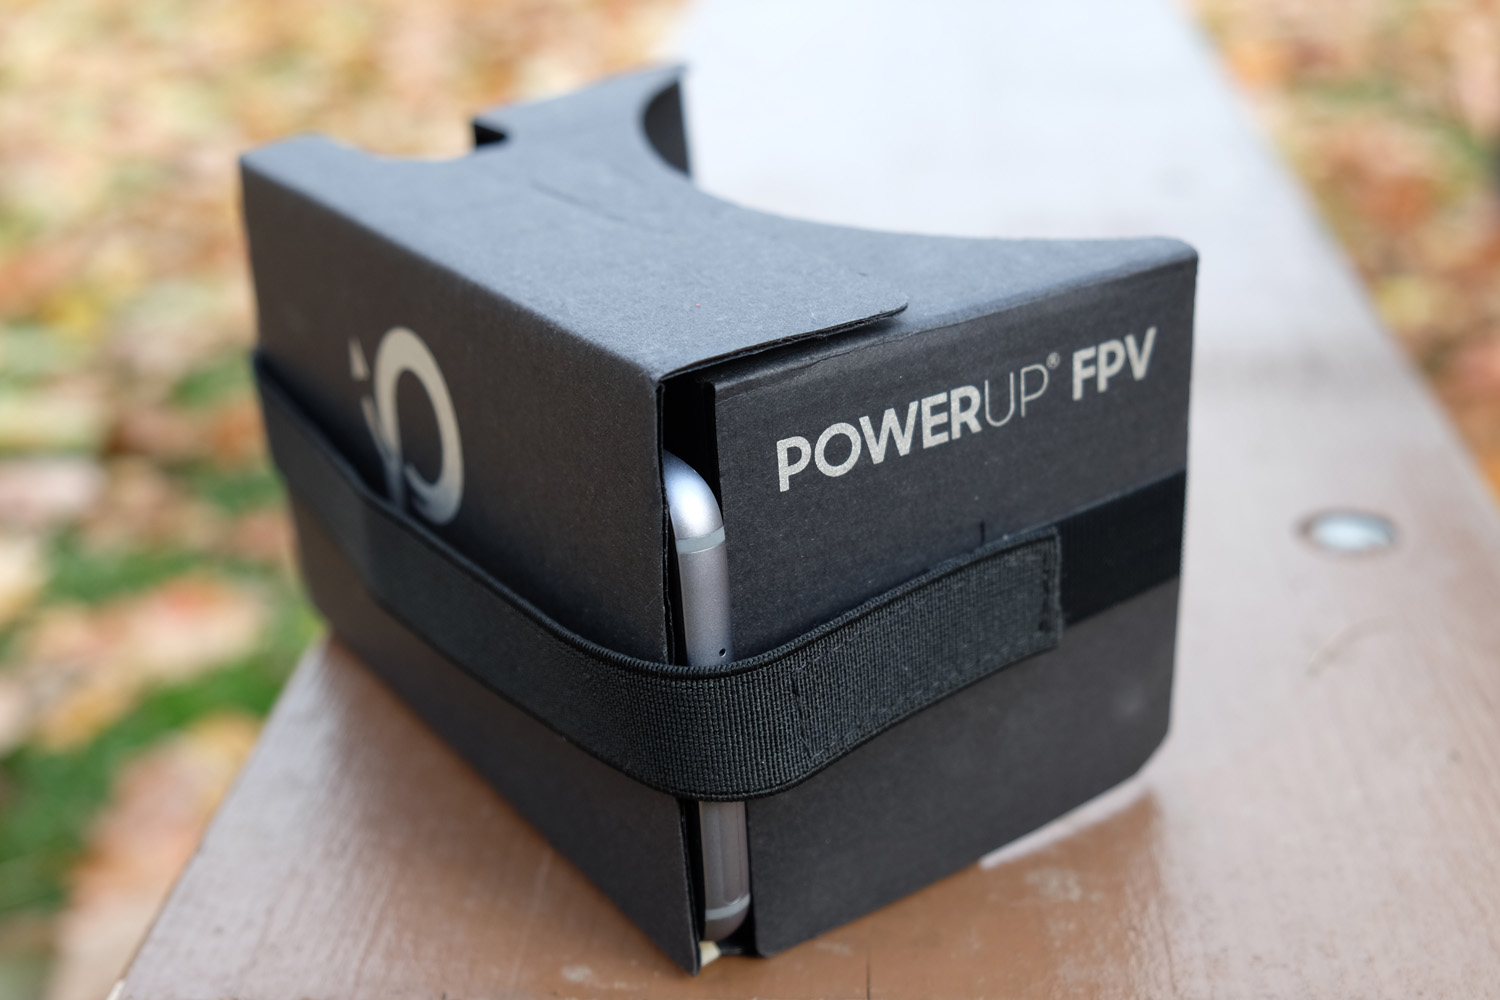 PowerUp FPV drone